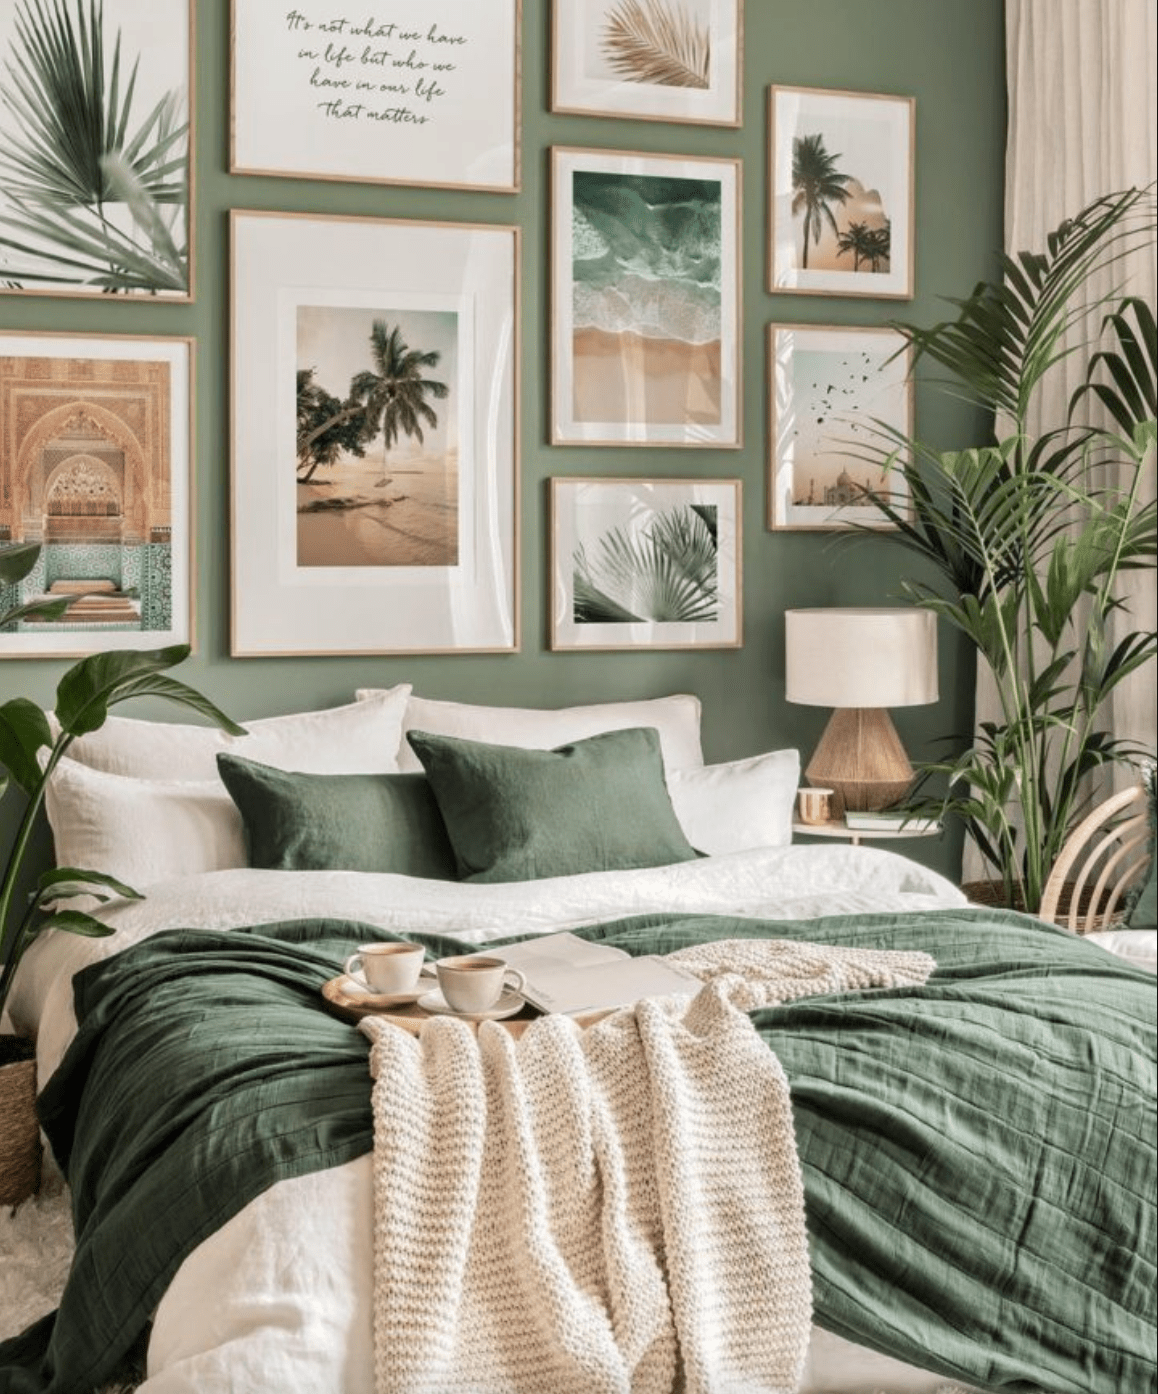 Boho Bedrooms: Rustic Bedroom ideas